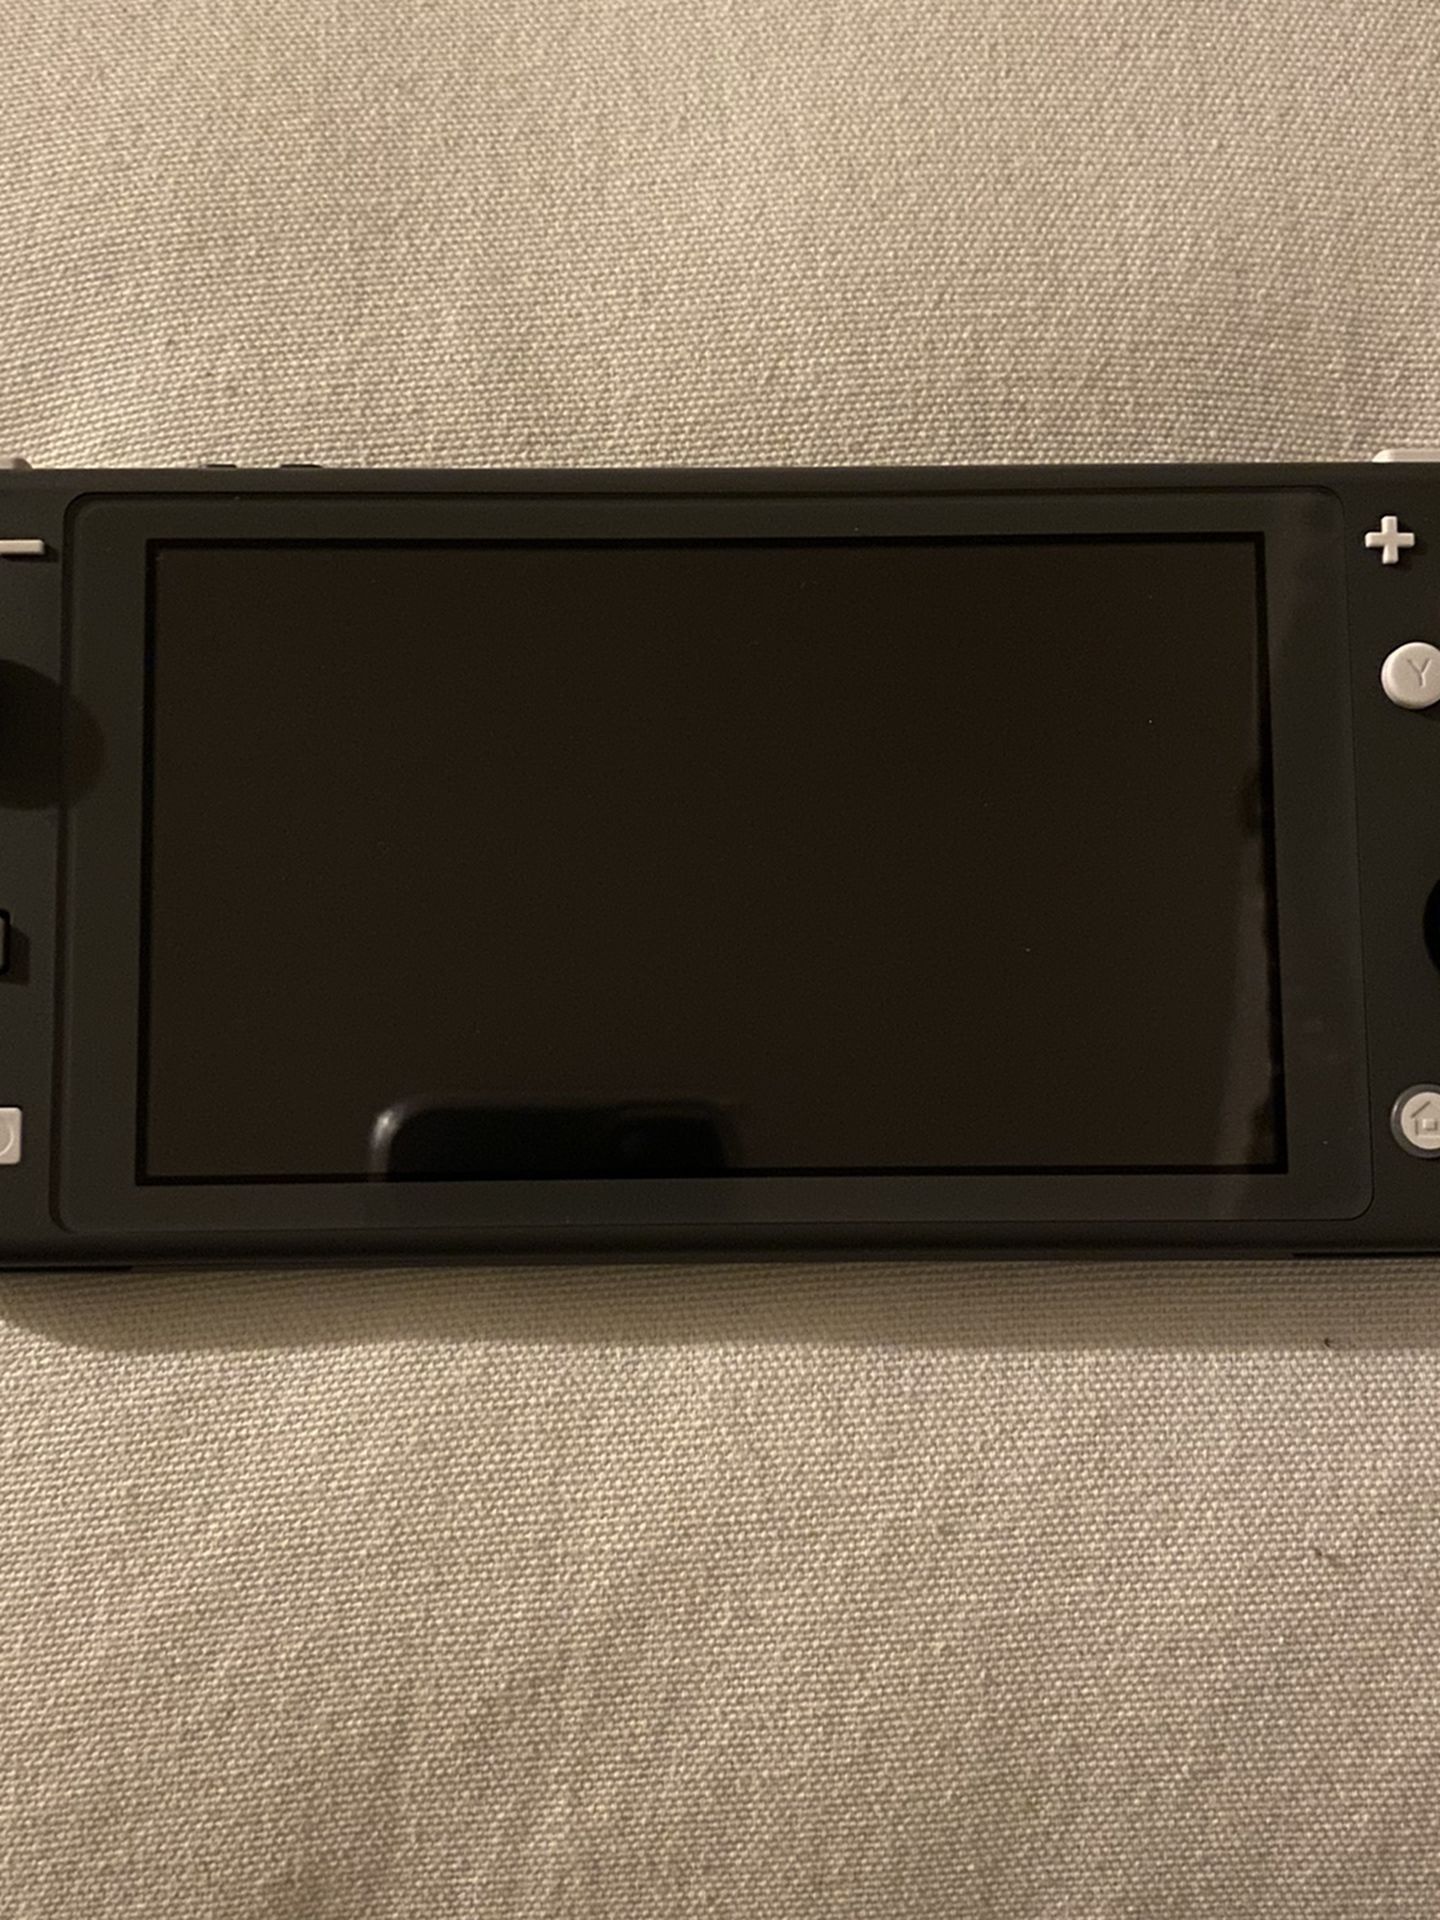 Nintendo Switch Lite, Grey Color